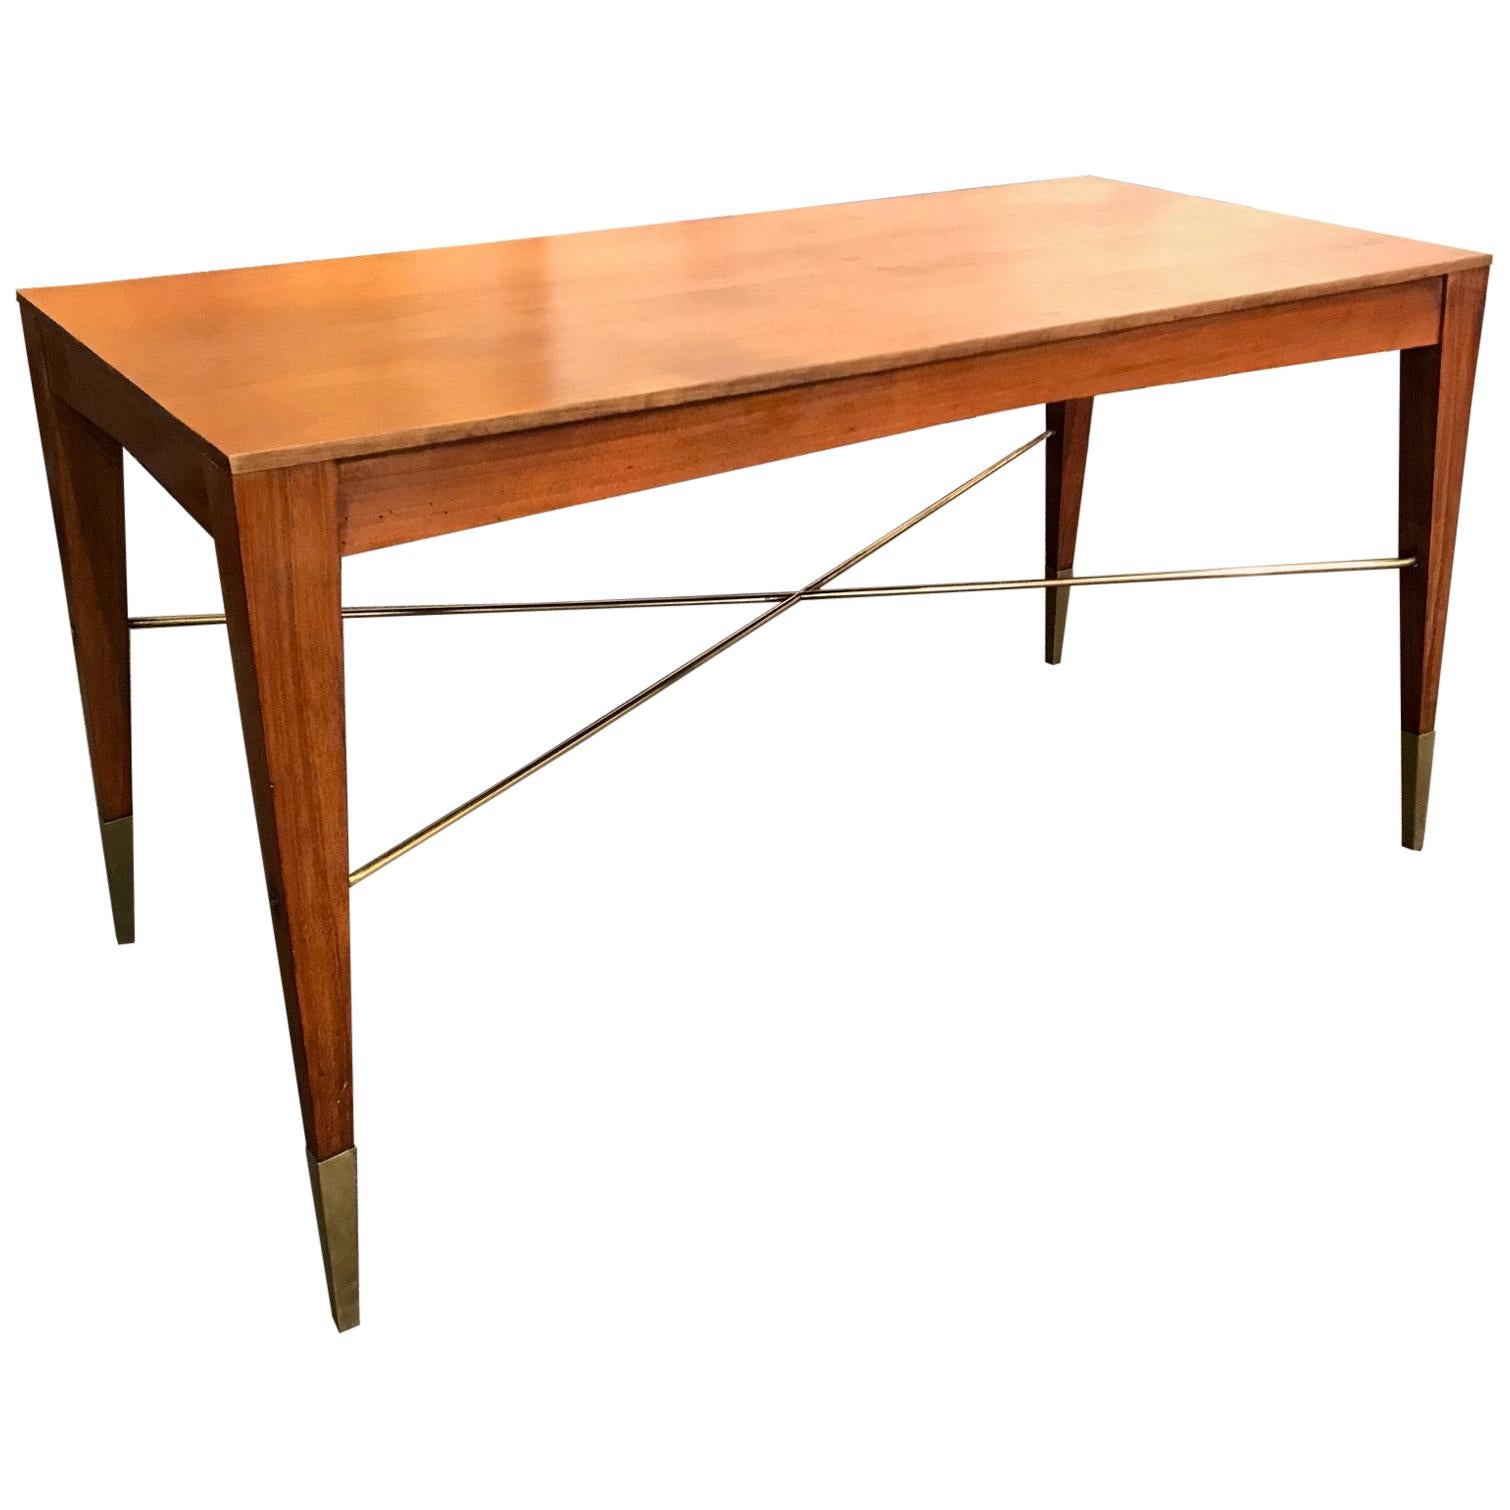 Italian Modernist Style Walnut Table Desk For Sale